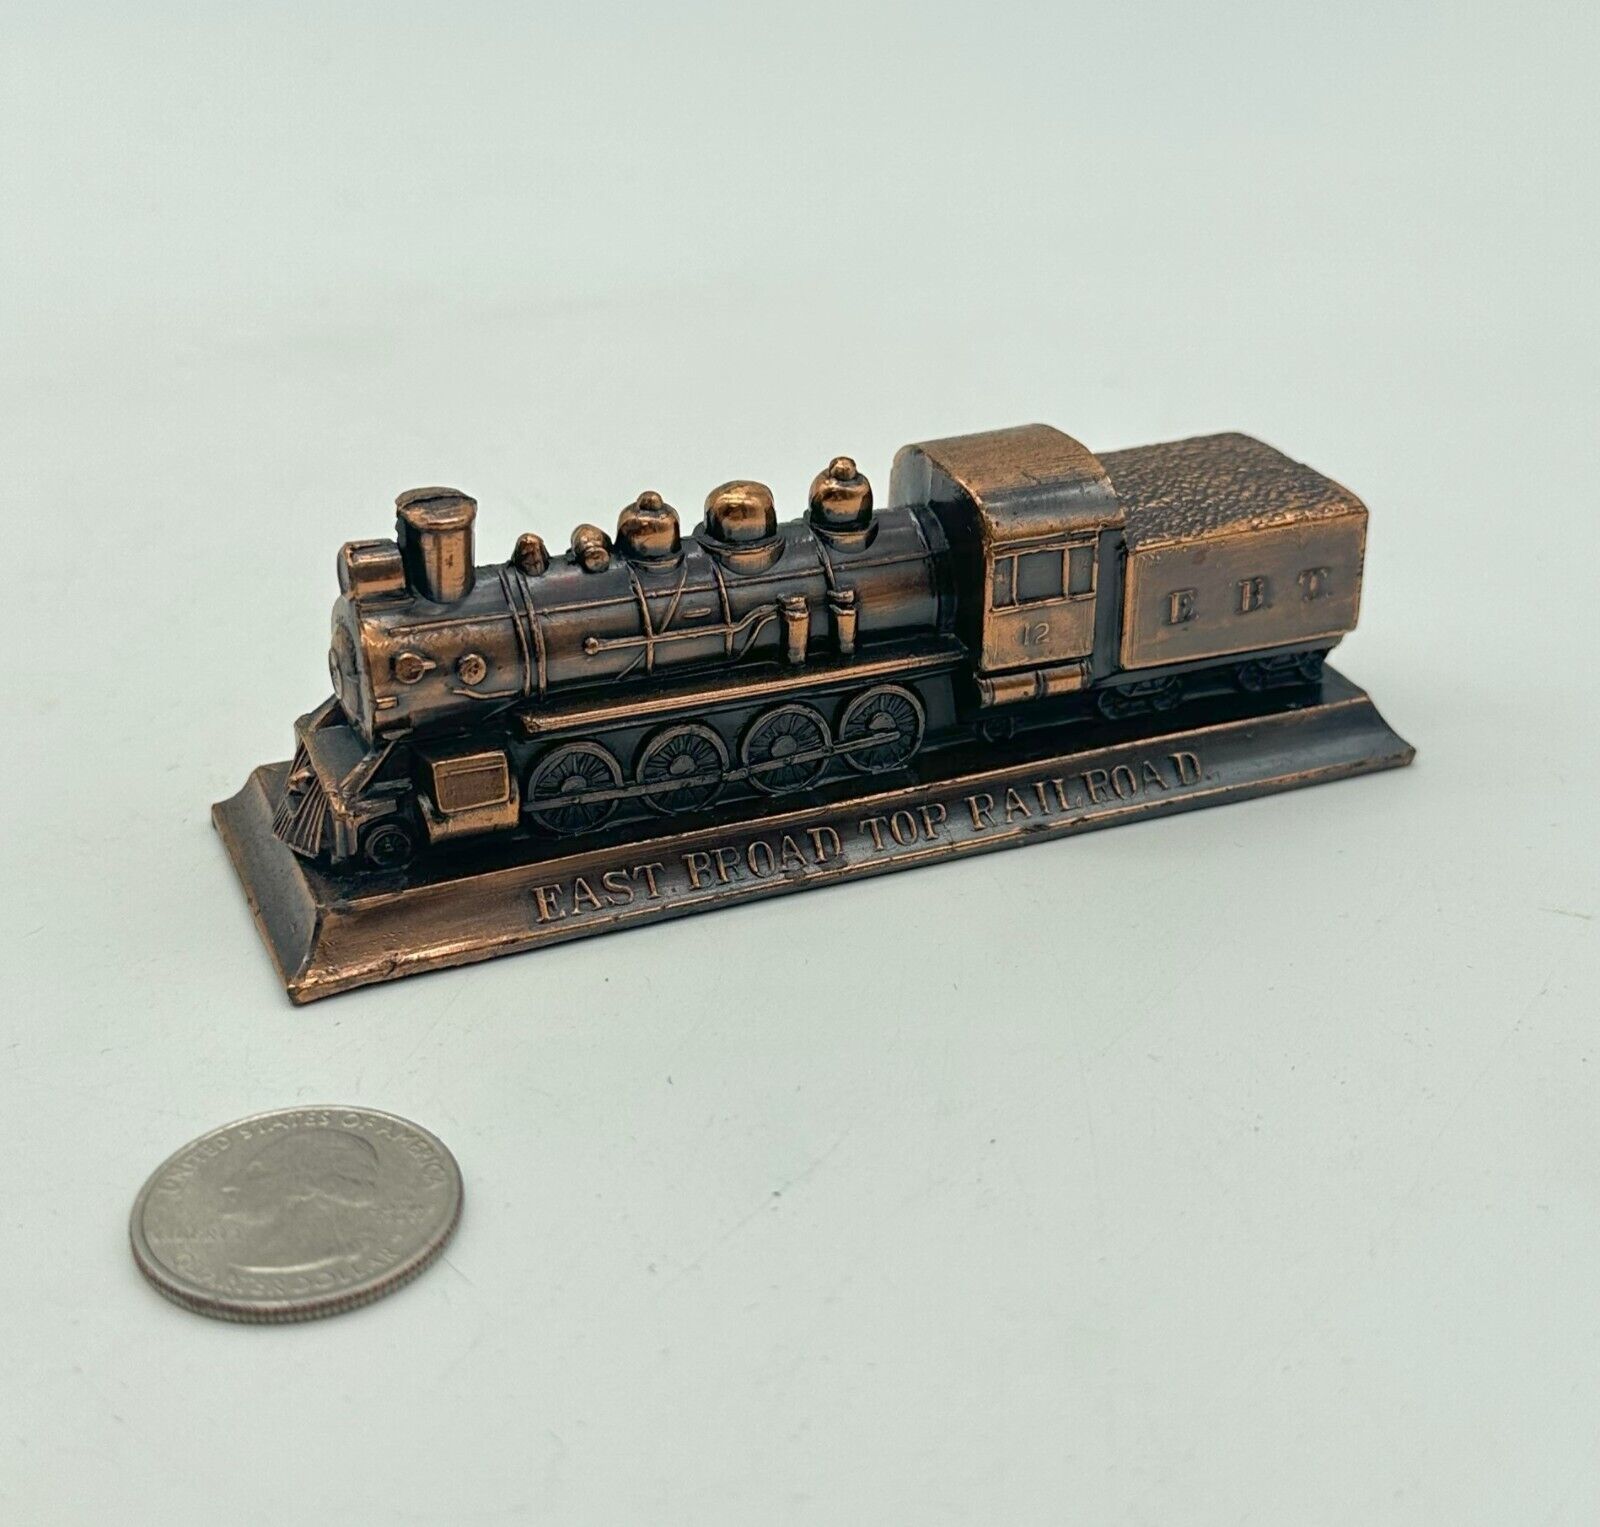 Vintage East Broad Top Railroad Steam Locomotive Engine #12 Desk Model 4.5in